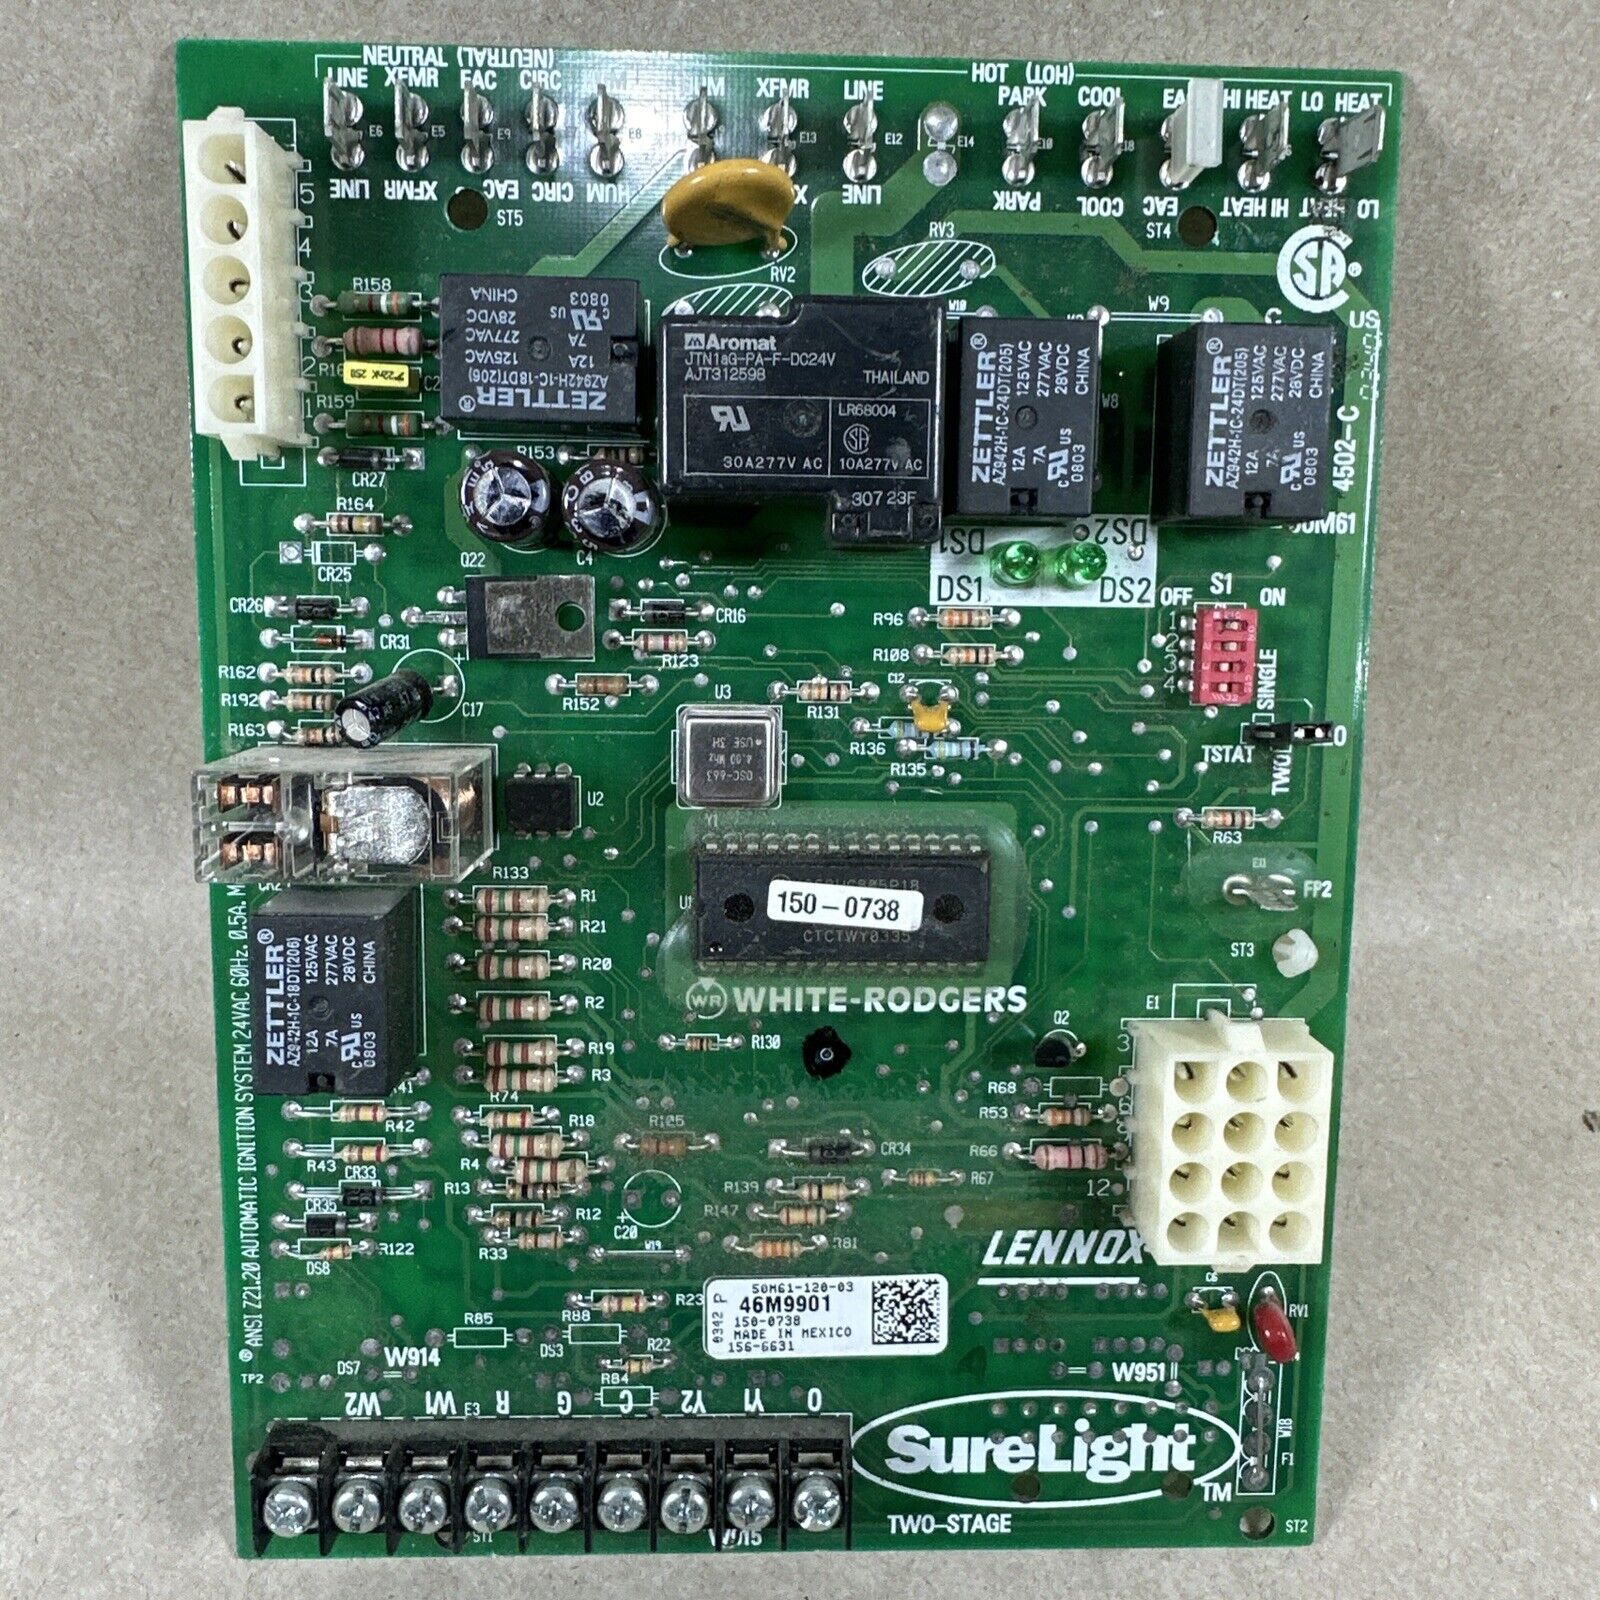 LENNOX 46M9901 Furnace Control Circuit Board 50M61-120-03 150-0738 used (N140)